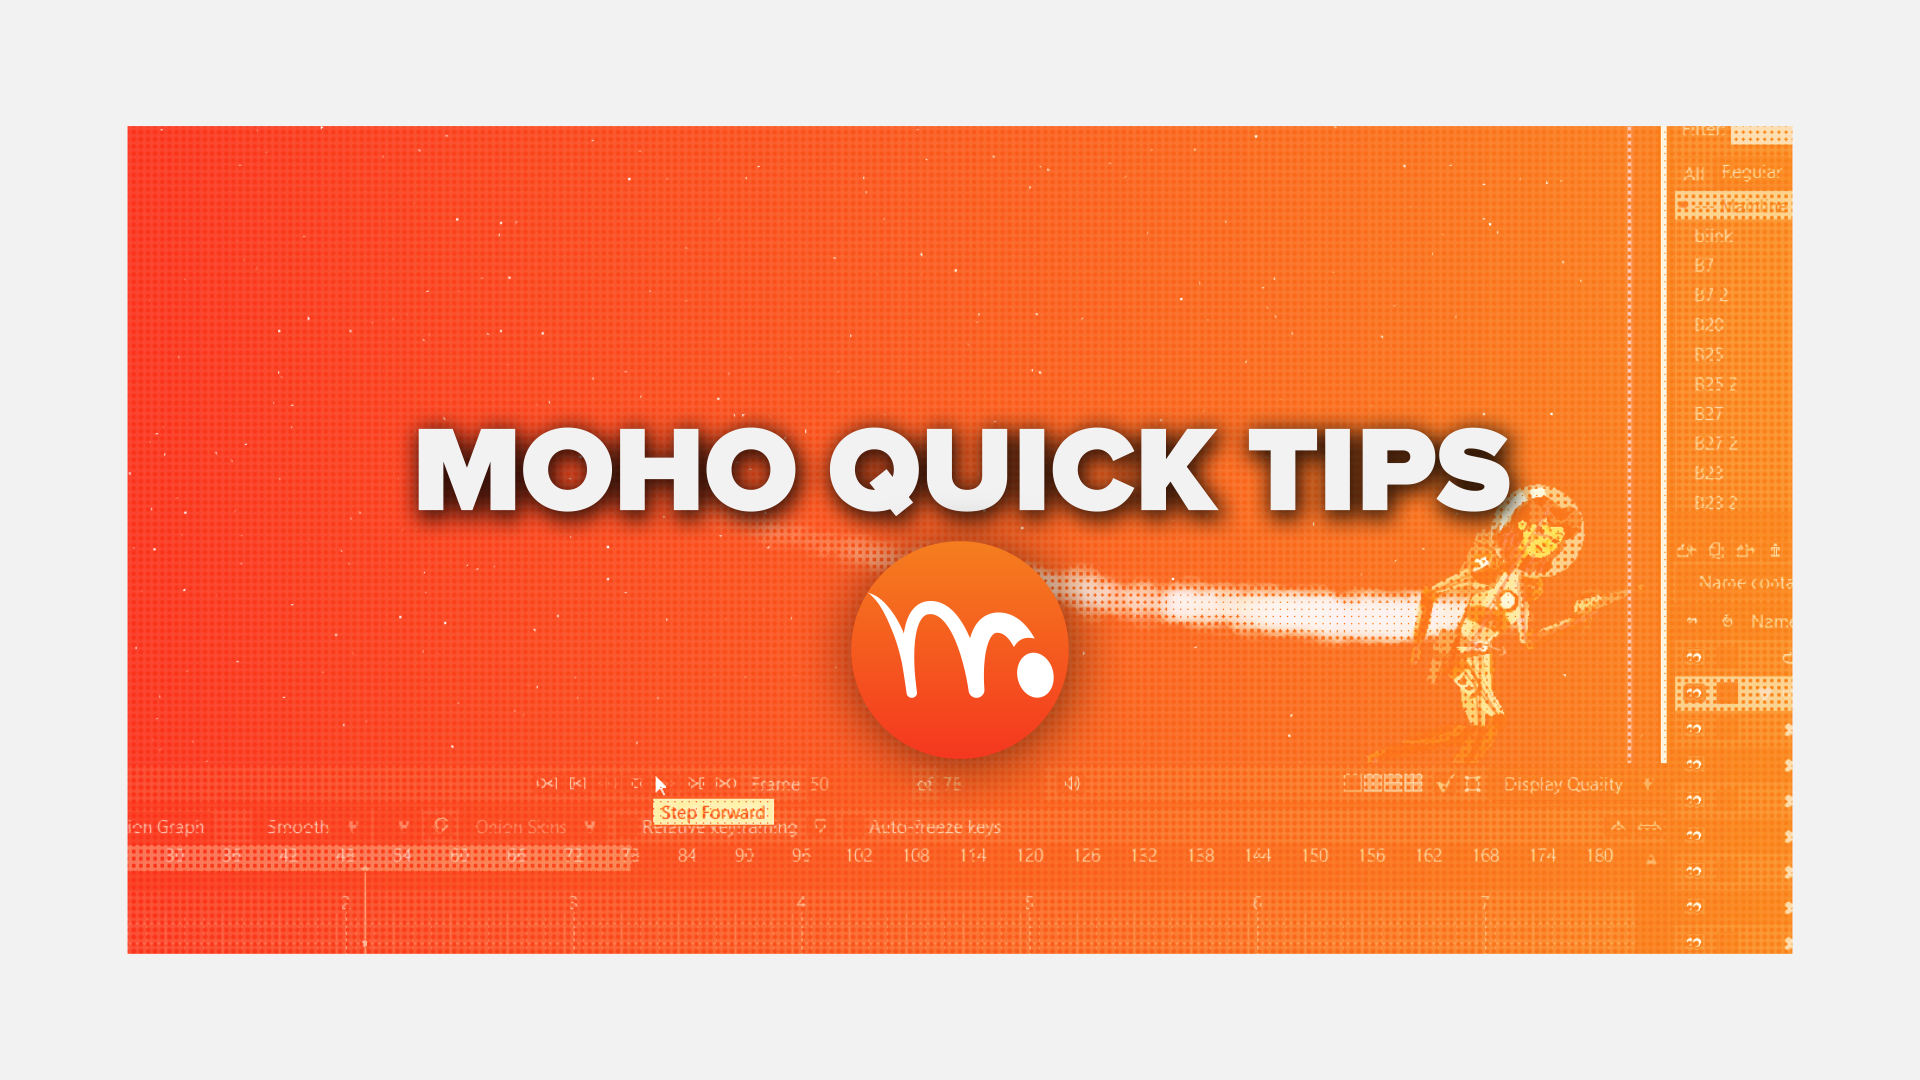 Moho Quick Tips